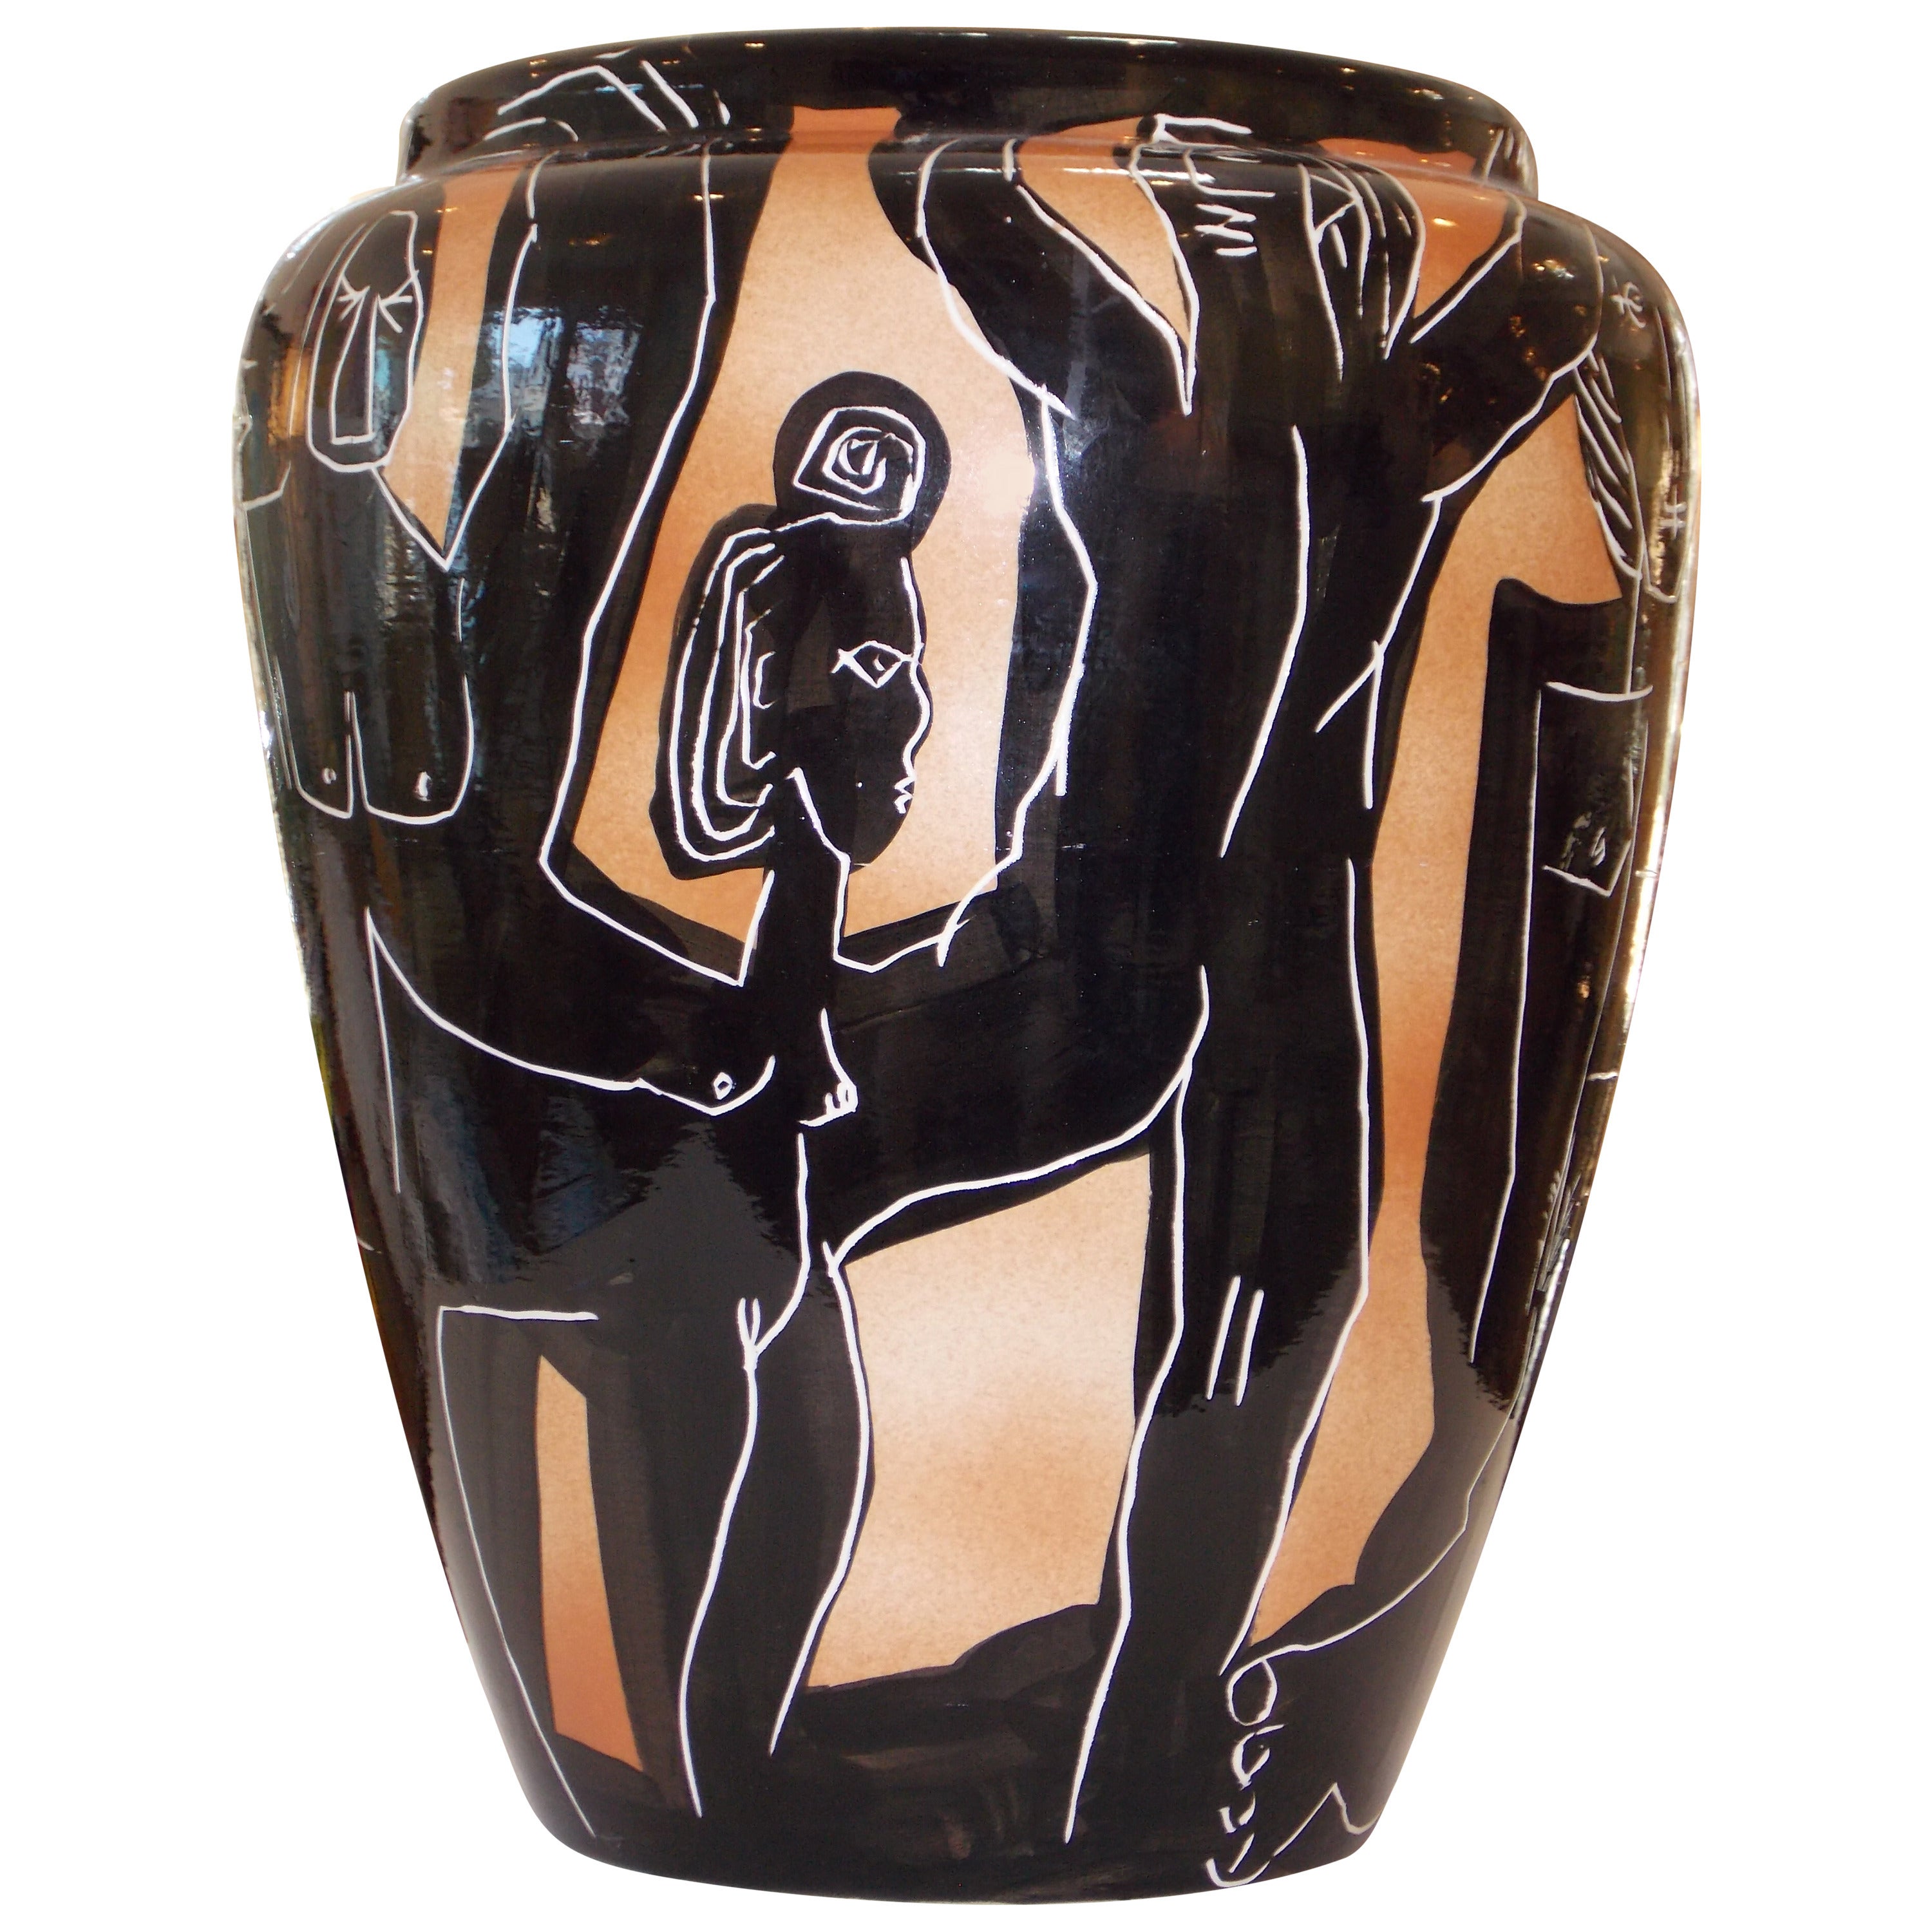 Jonathan Nash Glynn Hand-Painted Urn or Vase